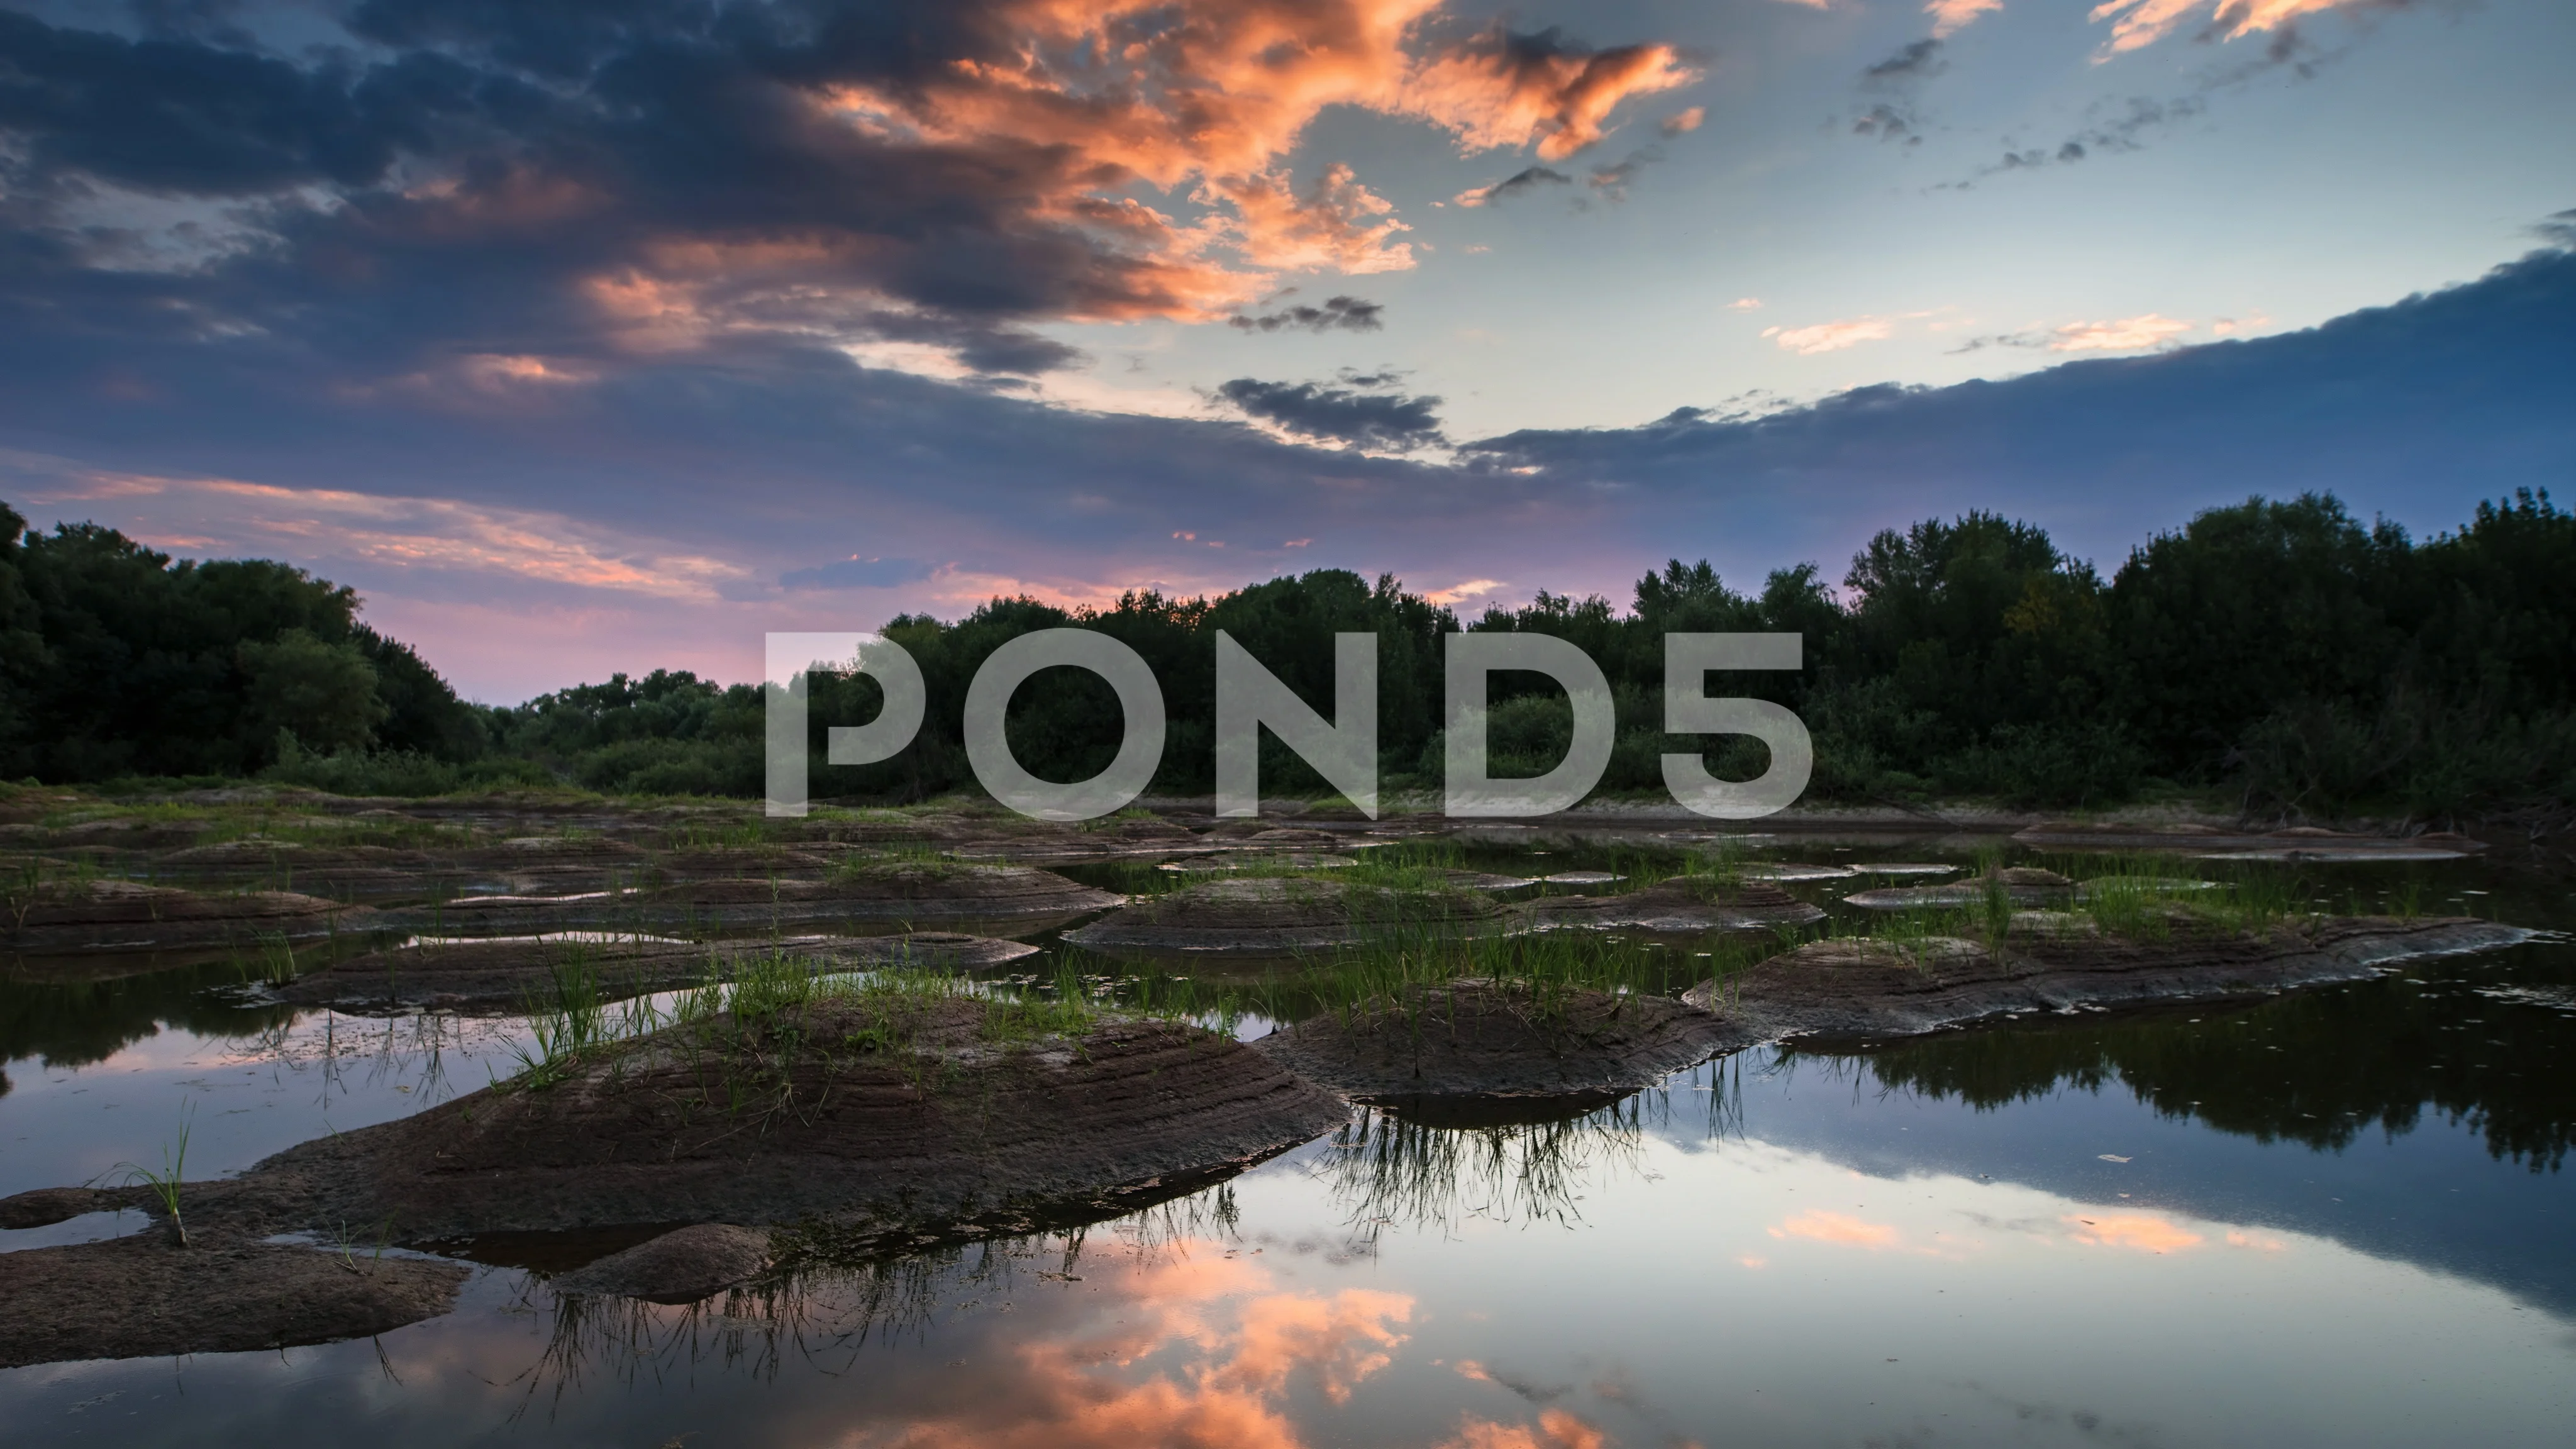 TimeLapse Nature. Beautiful sunset Video | Pond5